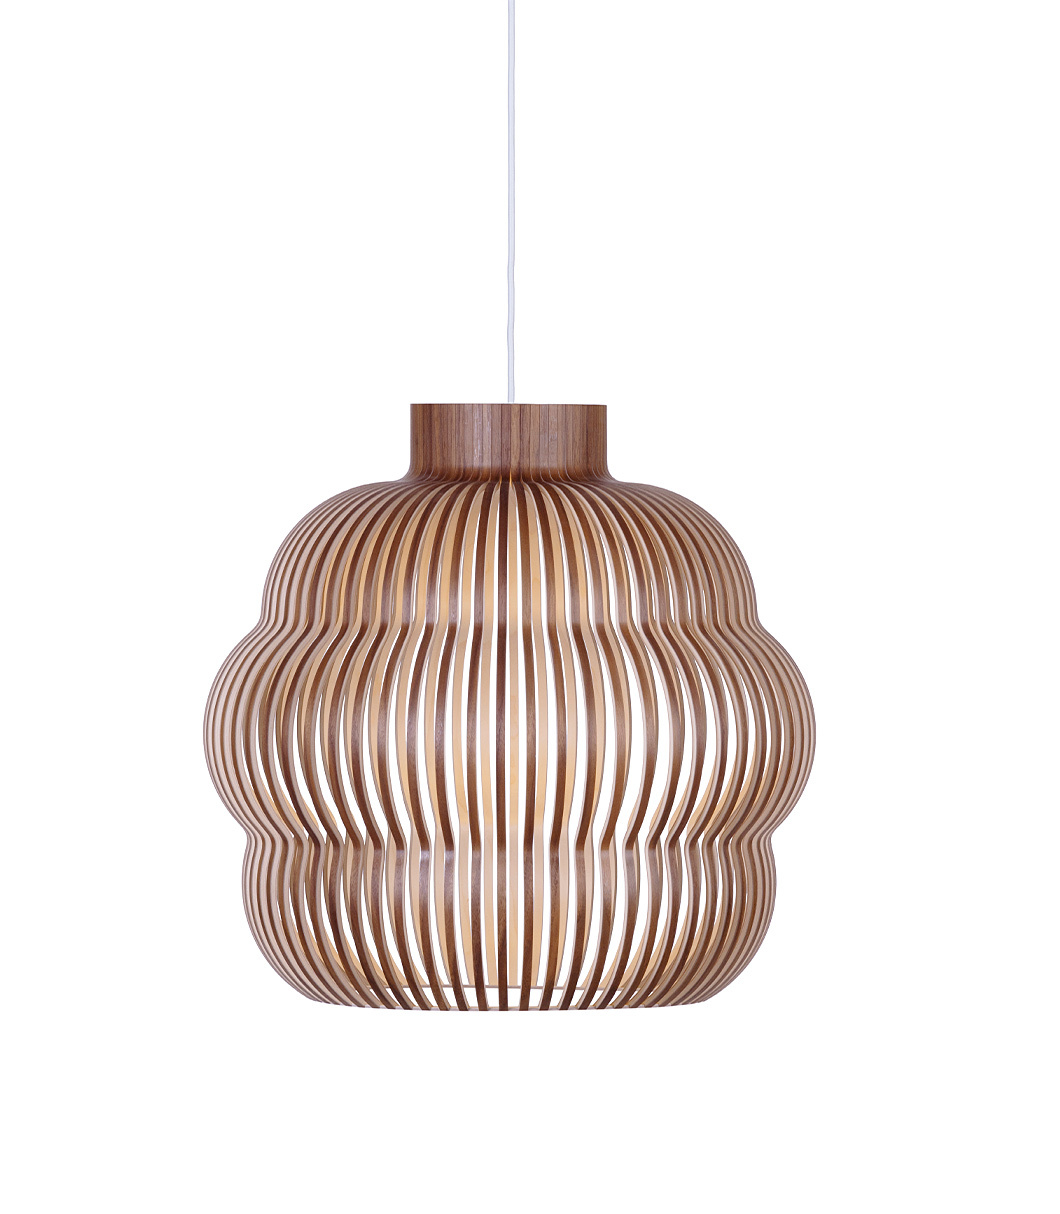 Kumulo 5200 pendant lamp is available in walnut veneer